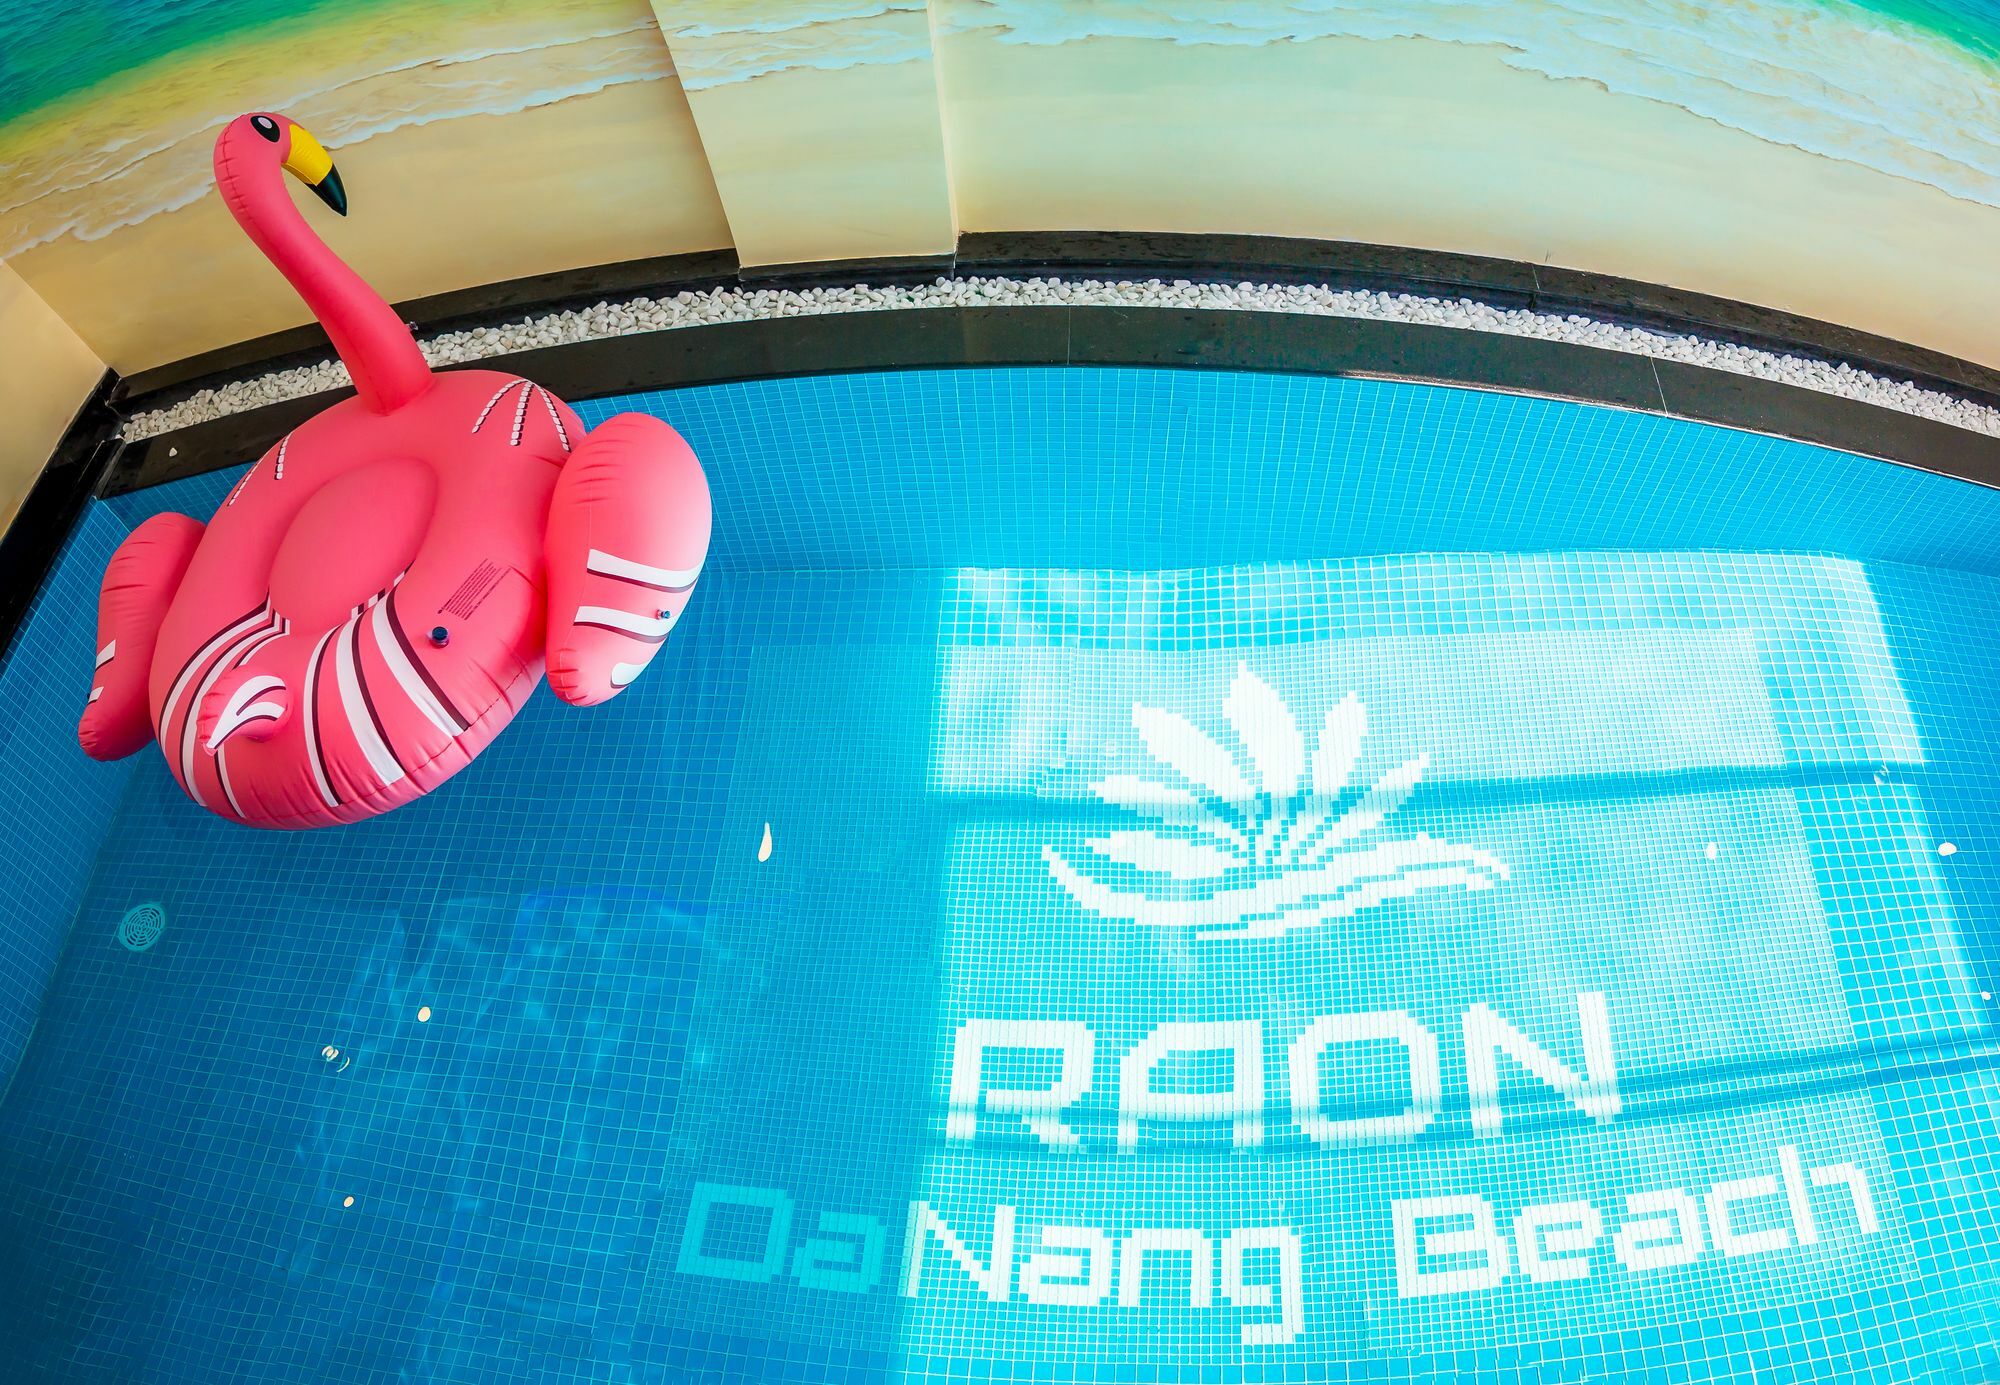 Raon Danang Beach - Stay 24H Экстерьер фото